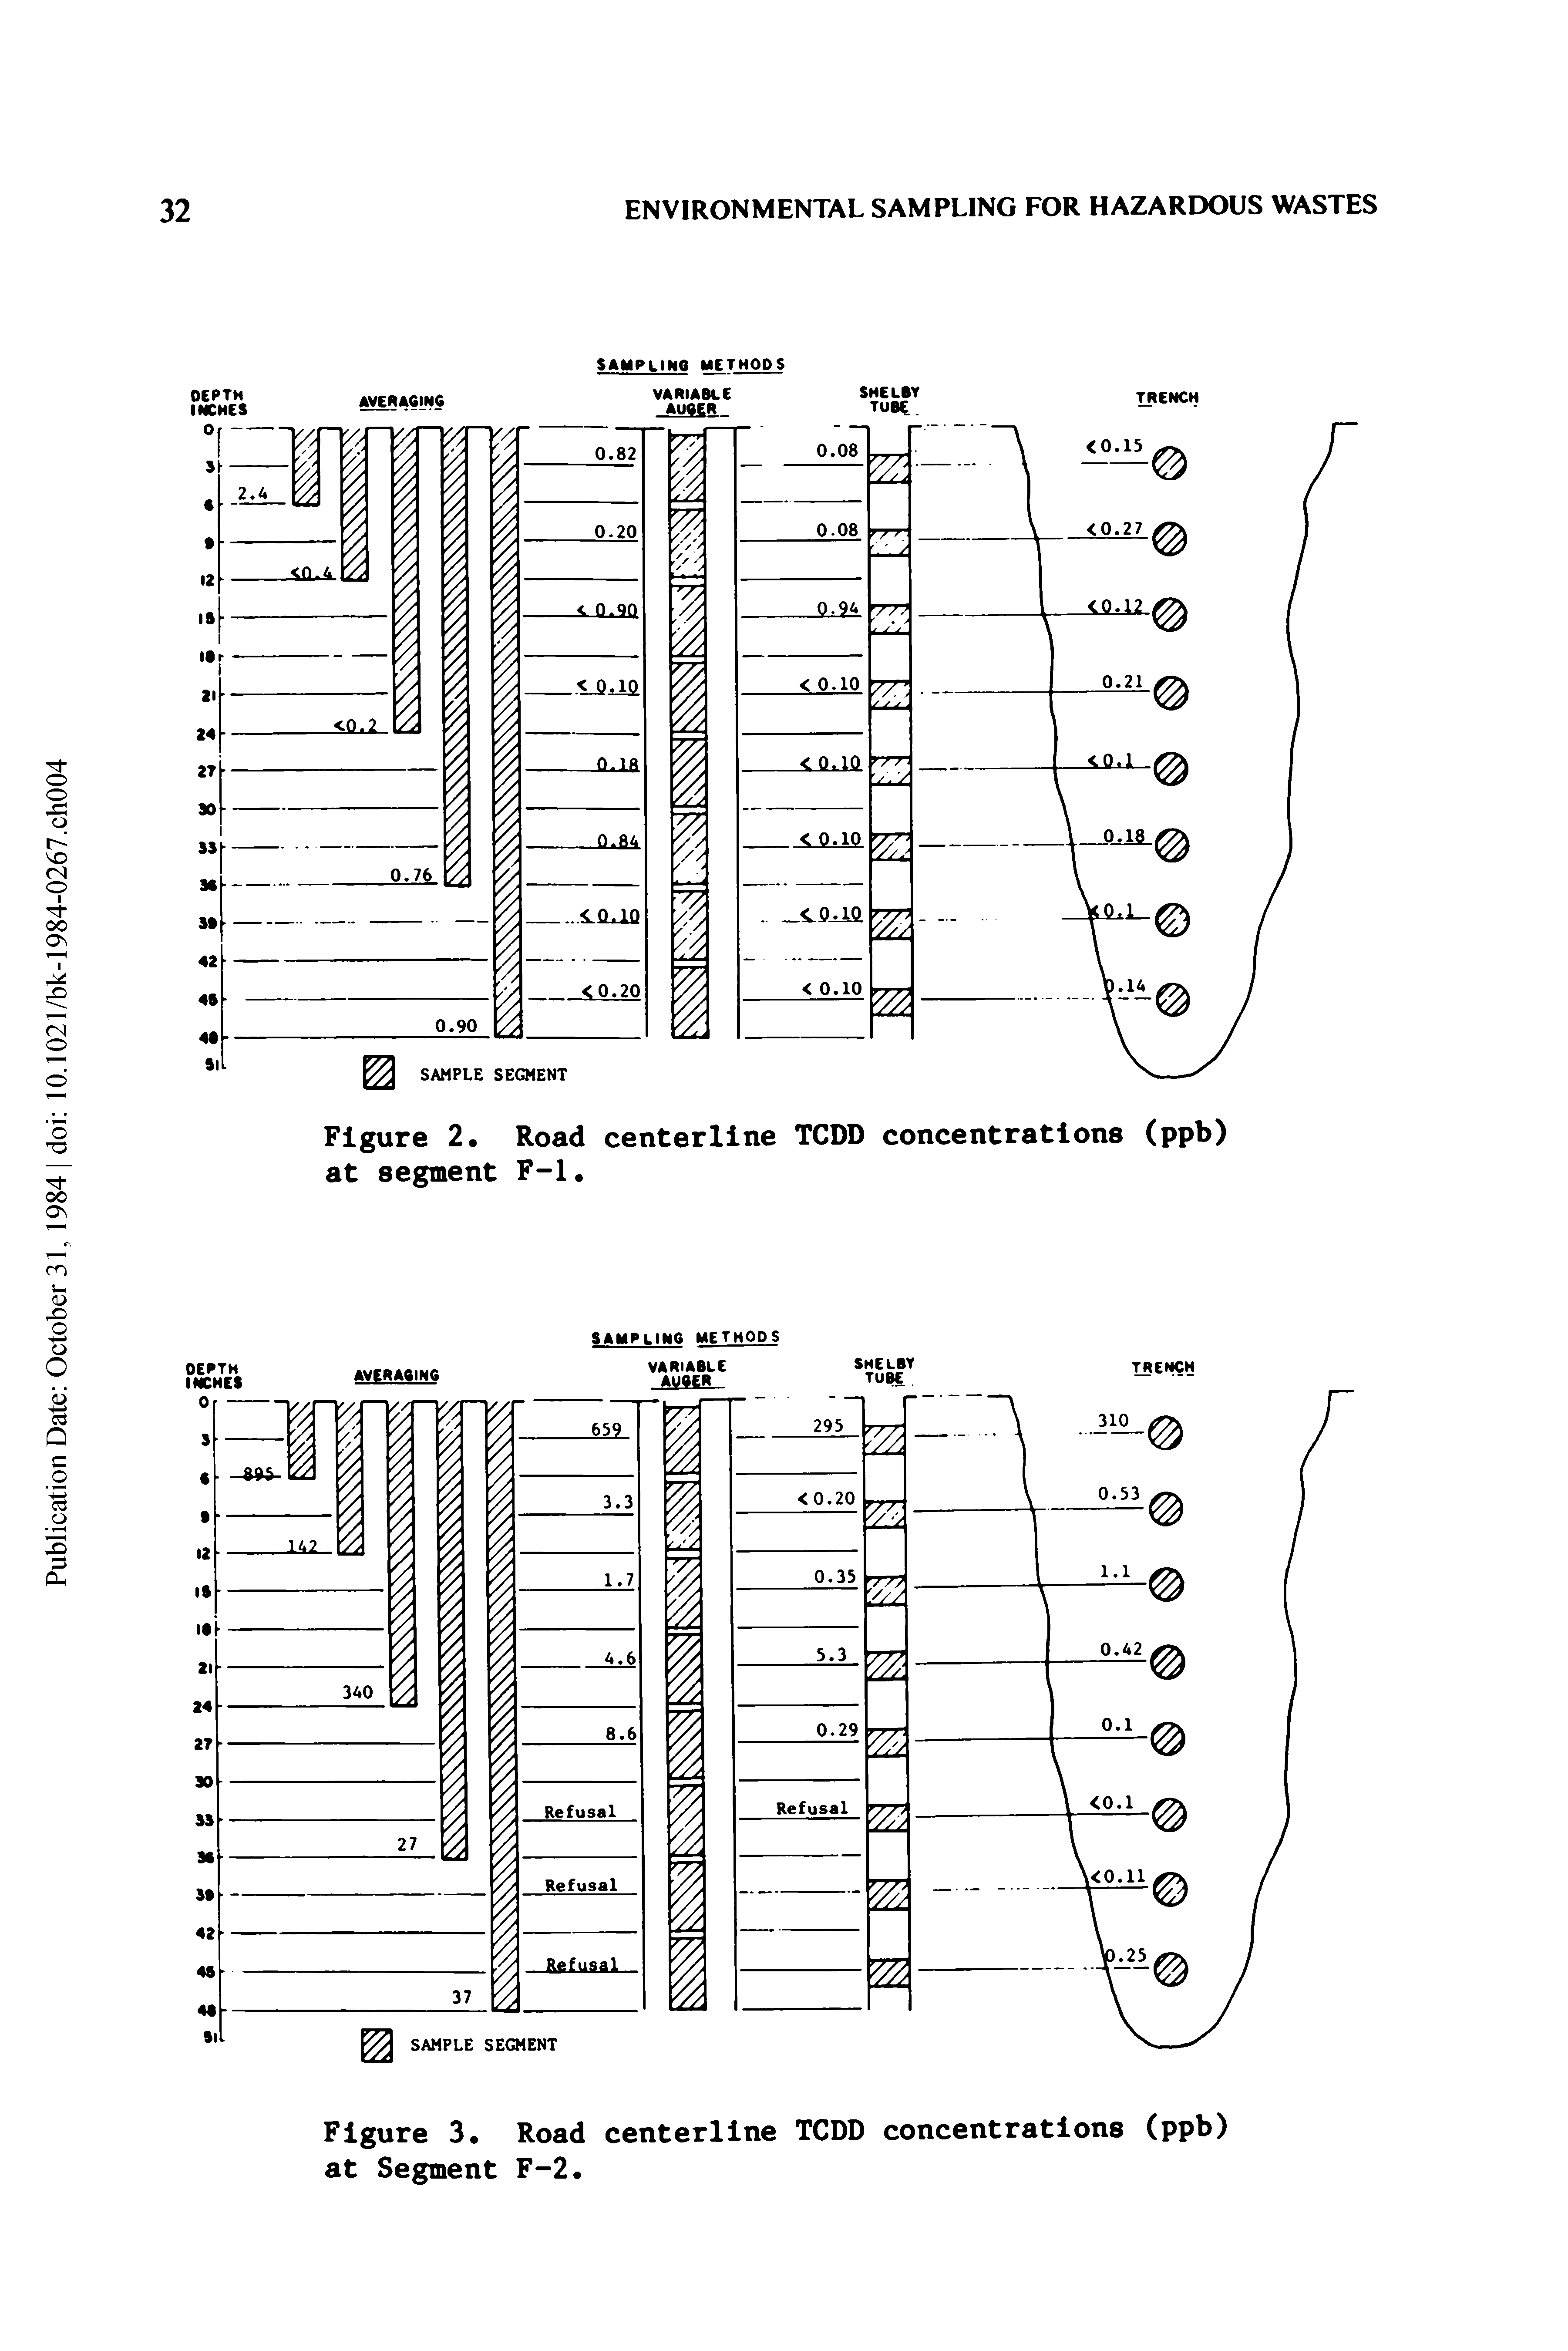 Figure 2. Road centerline TCDD concentrations (ppb) at segment F-1.